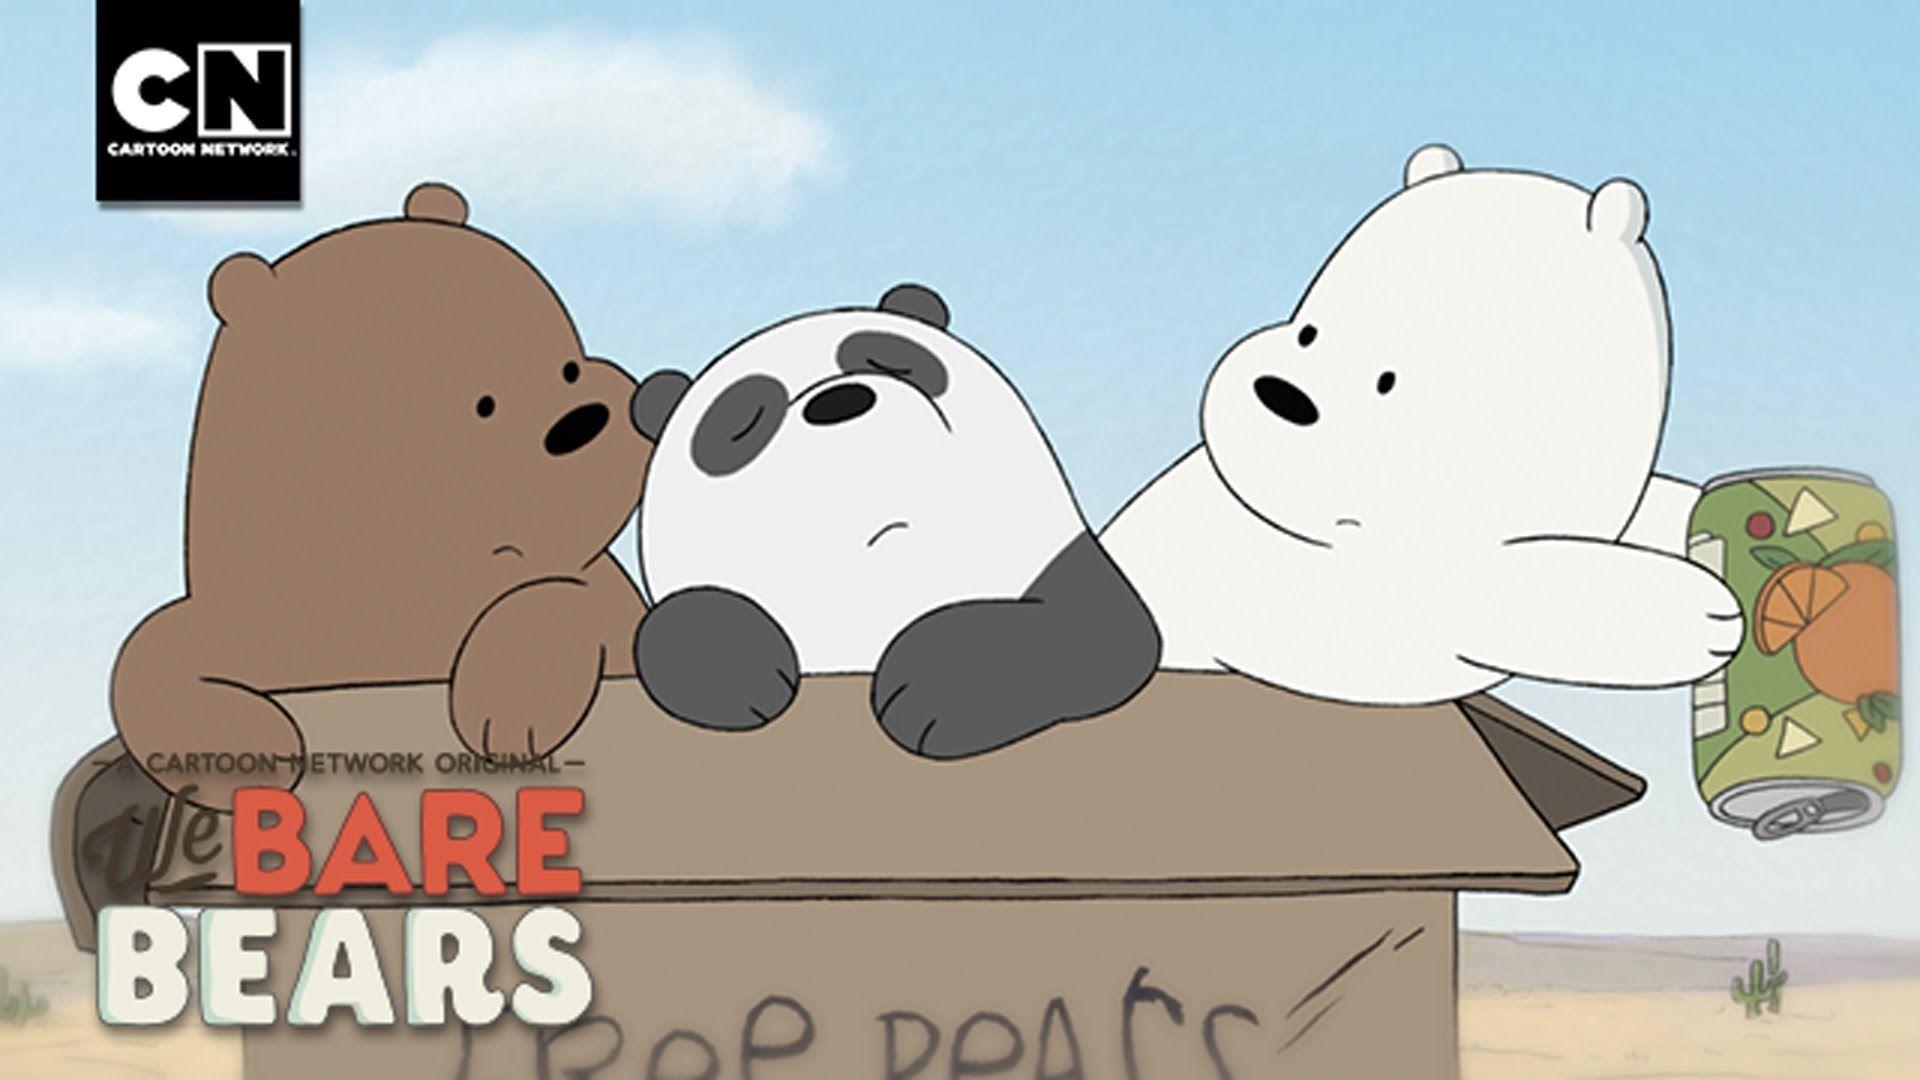 Best image about We Bare Bears. Panda bears